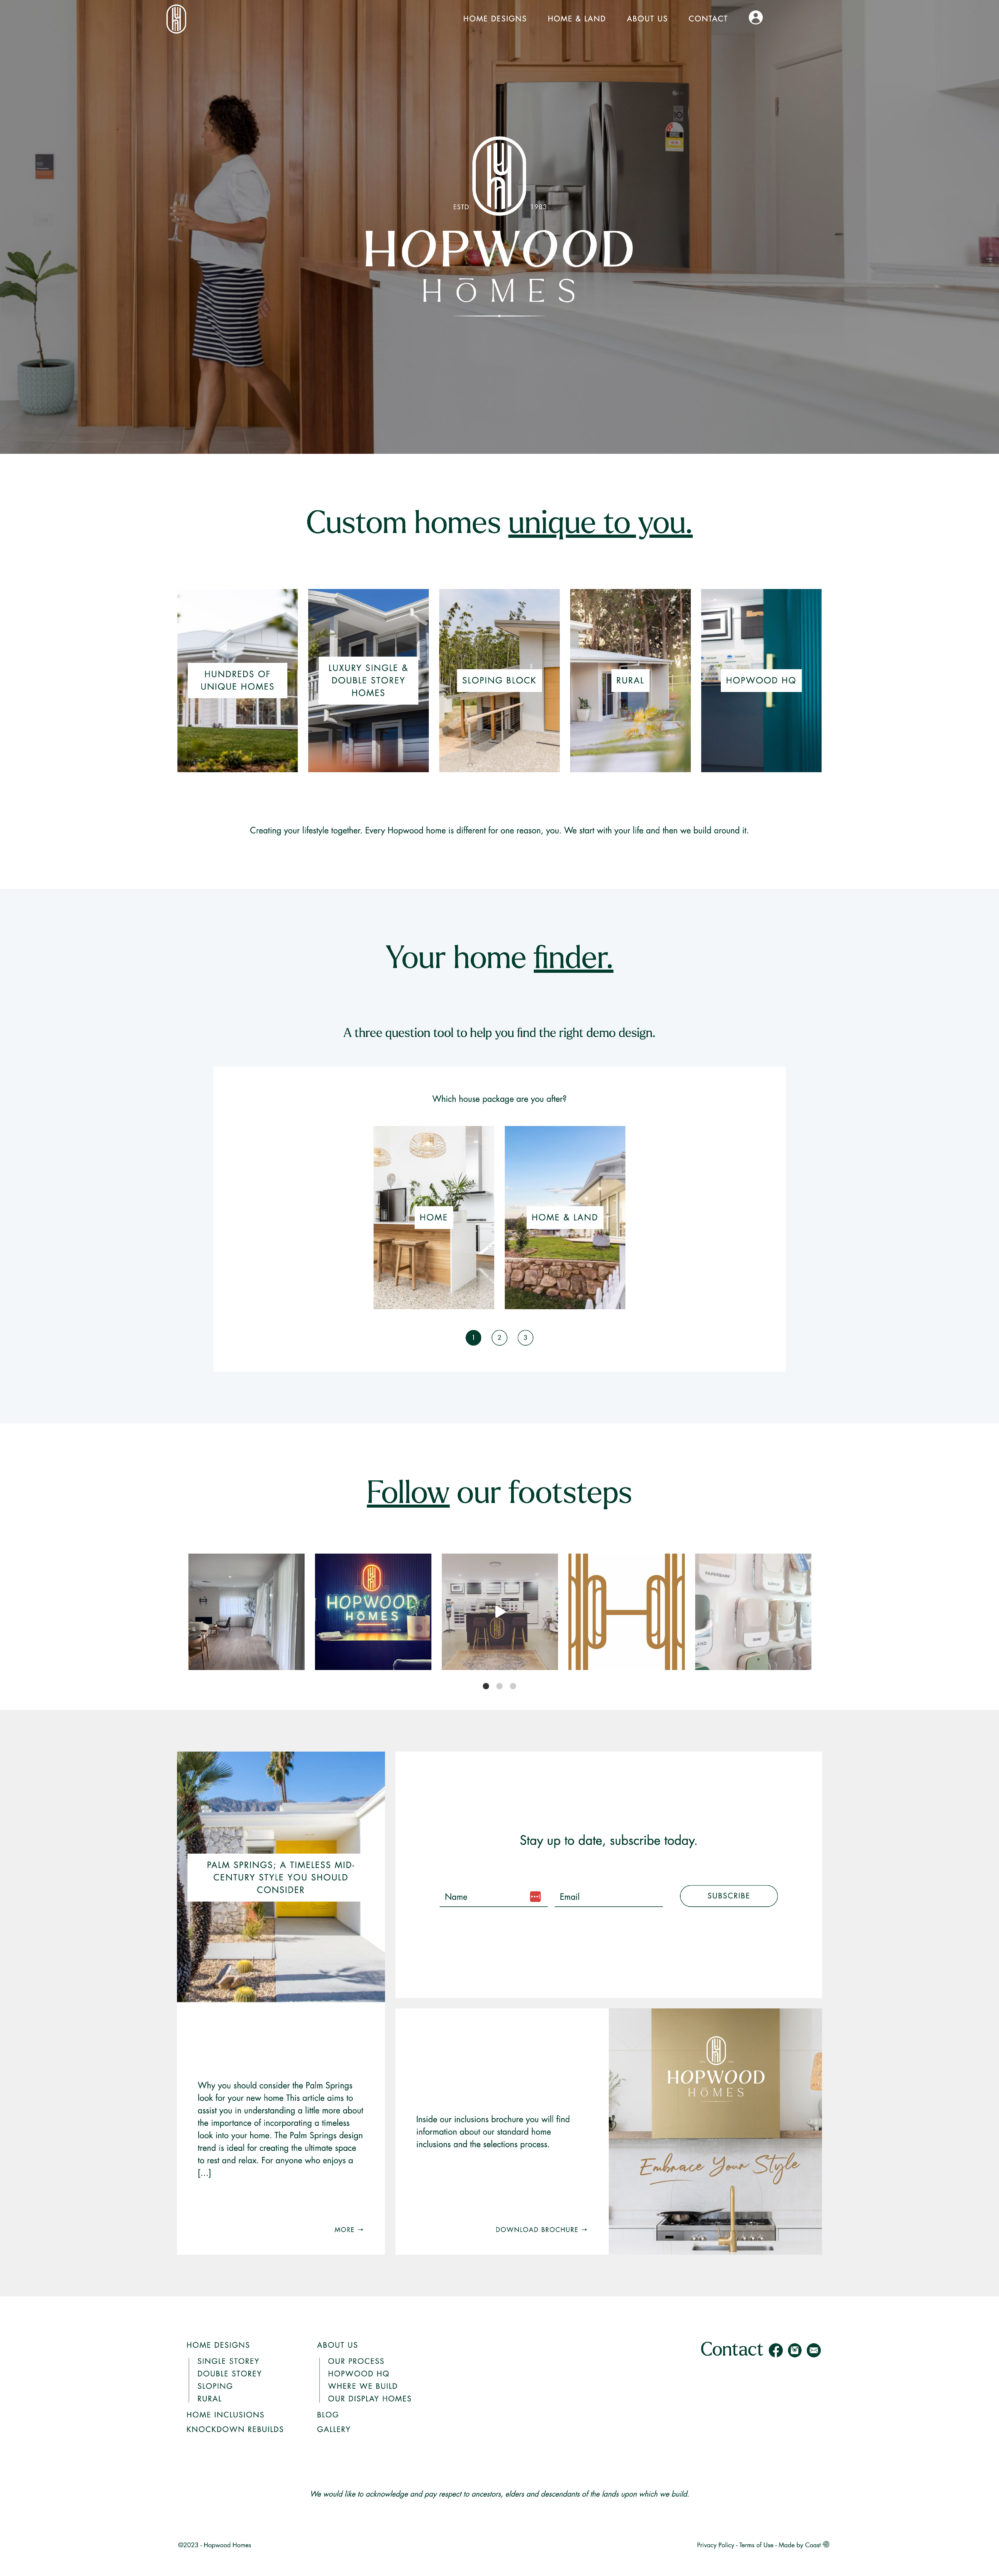 Website Design & Development for A Complete Rebrand for Hopwood Homes